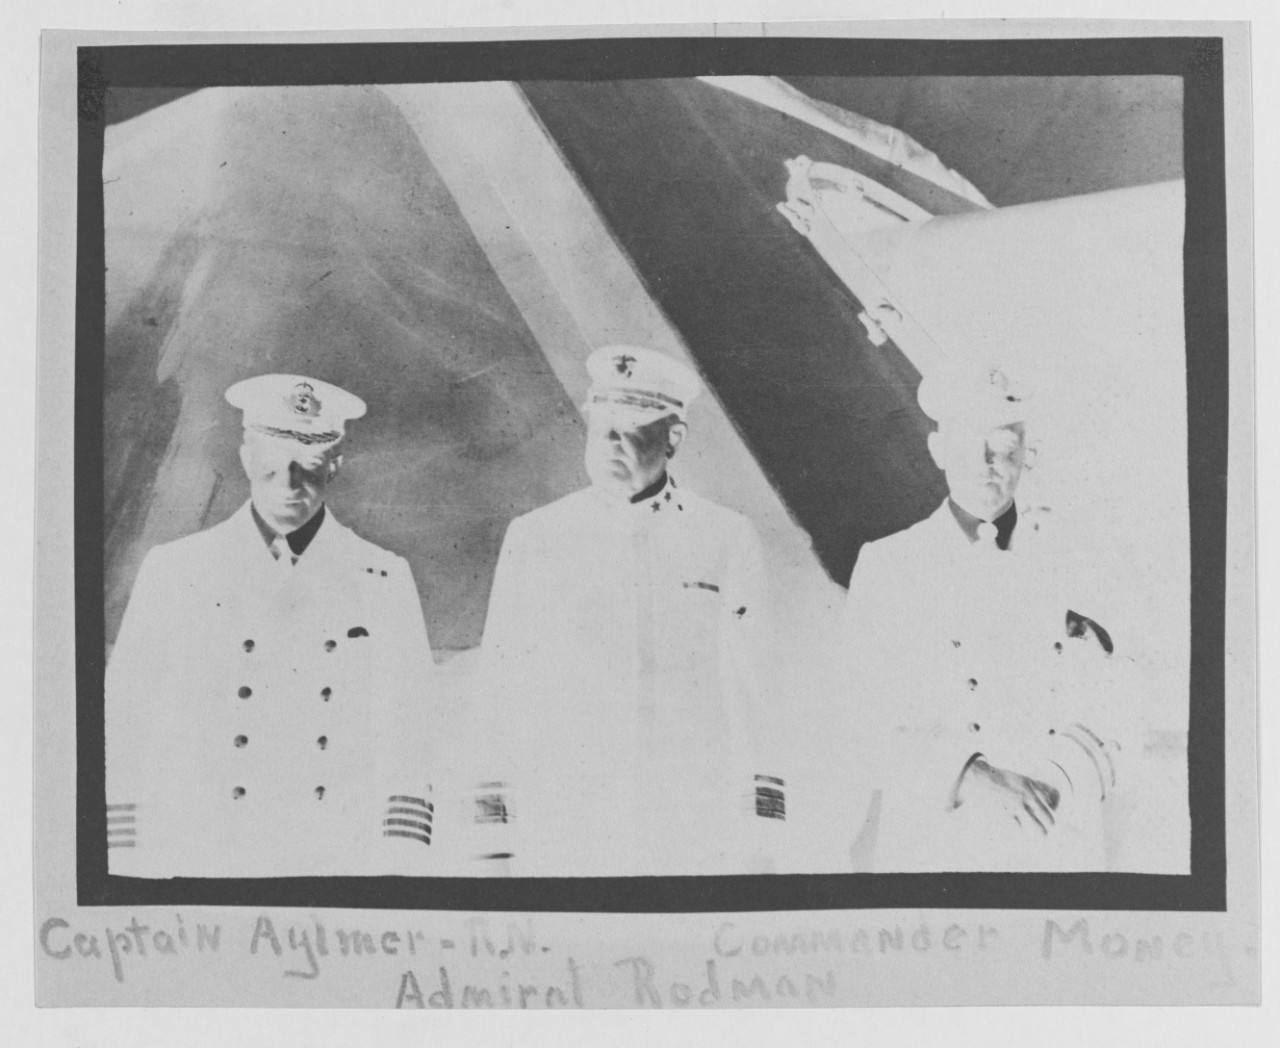 On board U.S.S. NEW YORK. Scapa Flow, 1918.